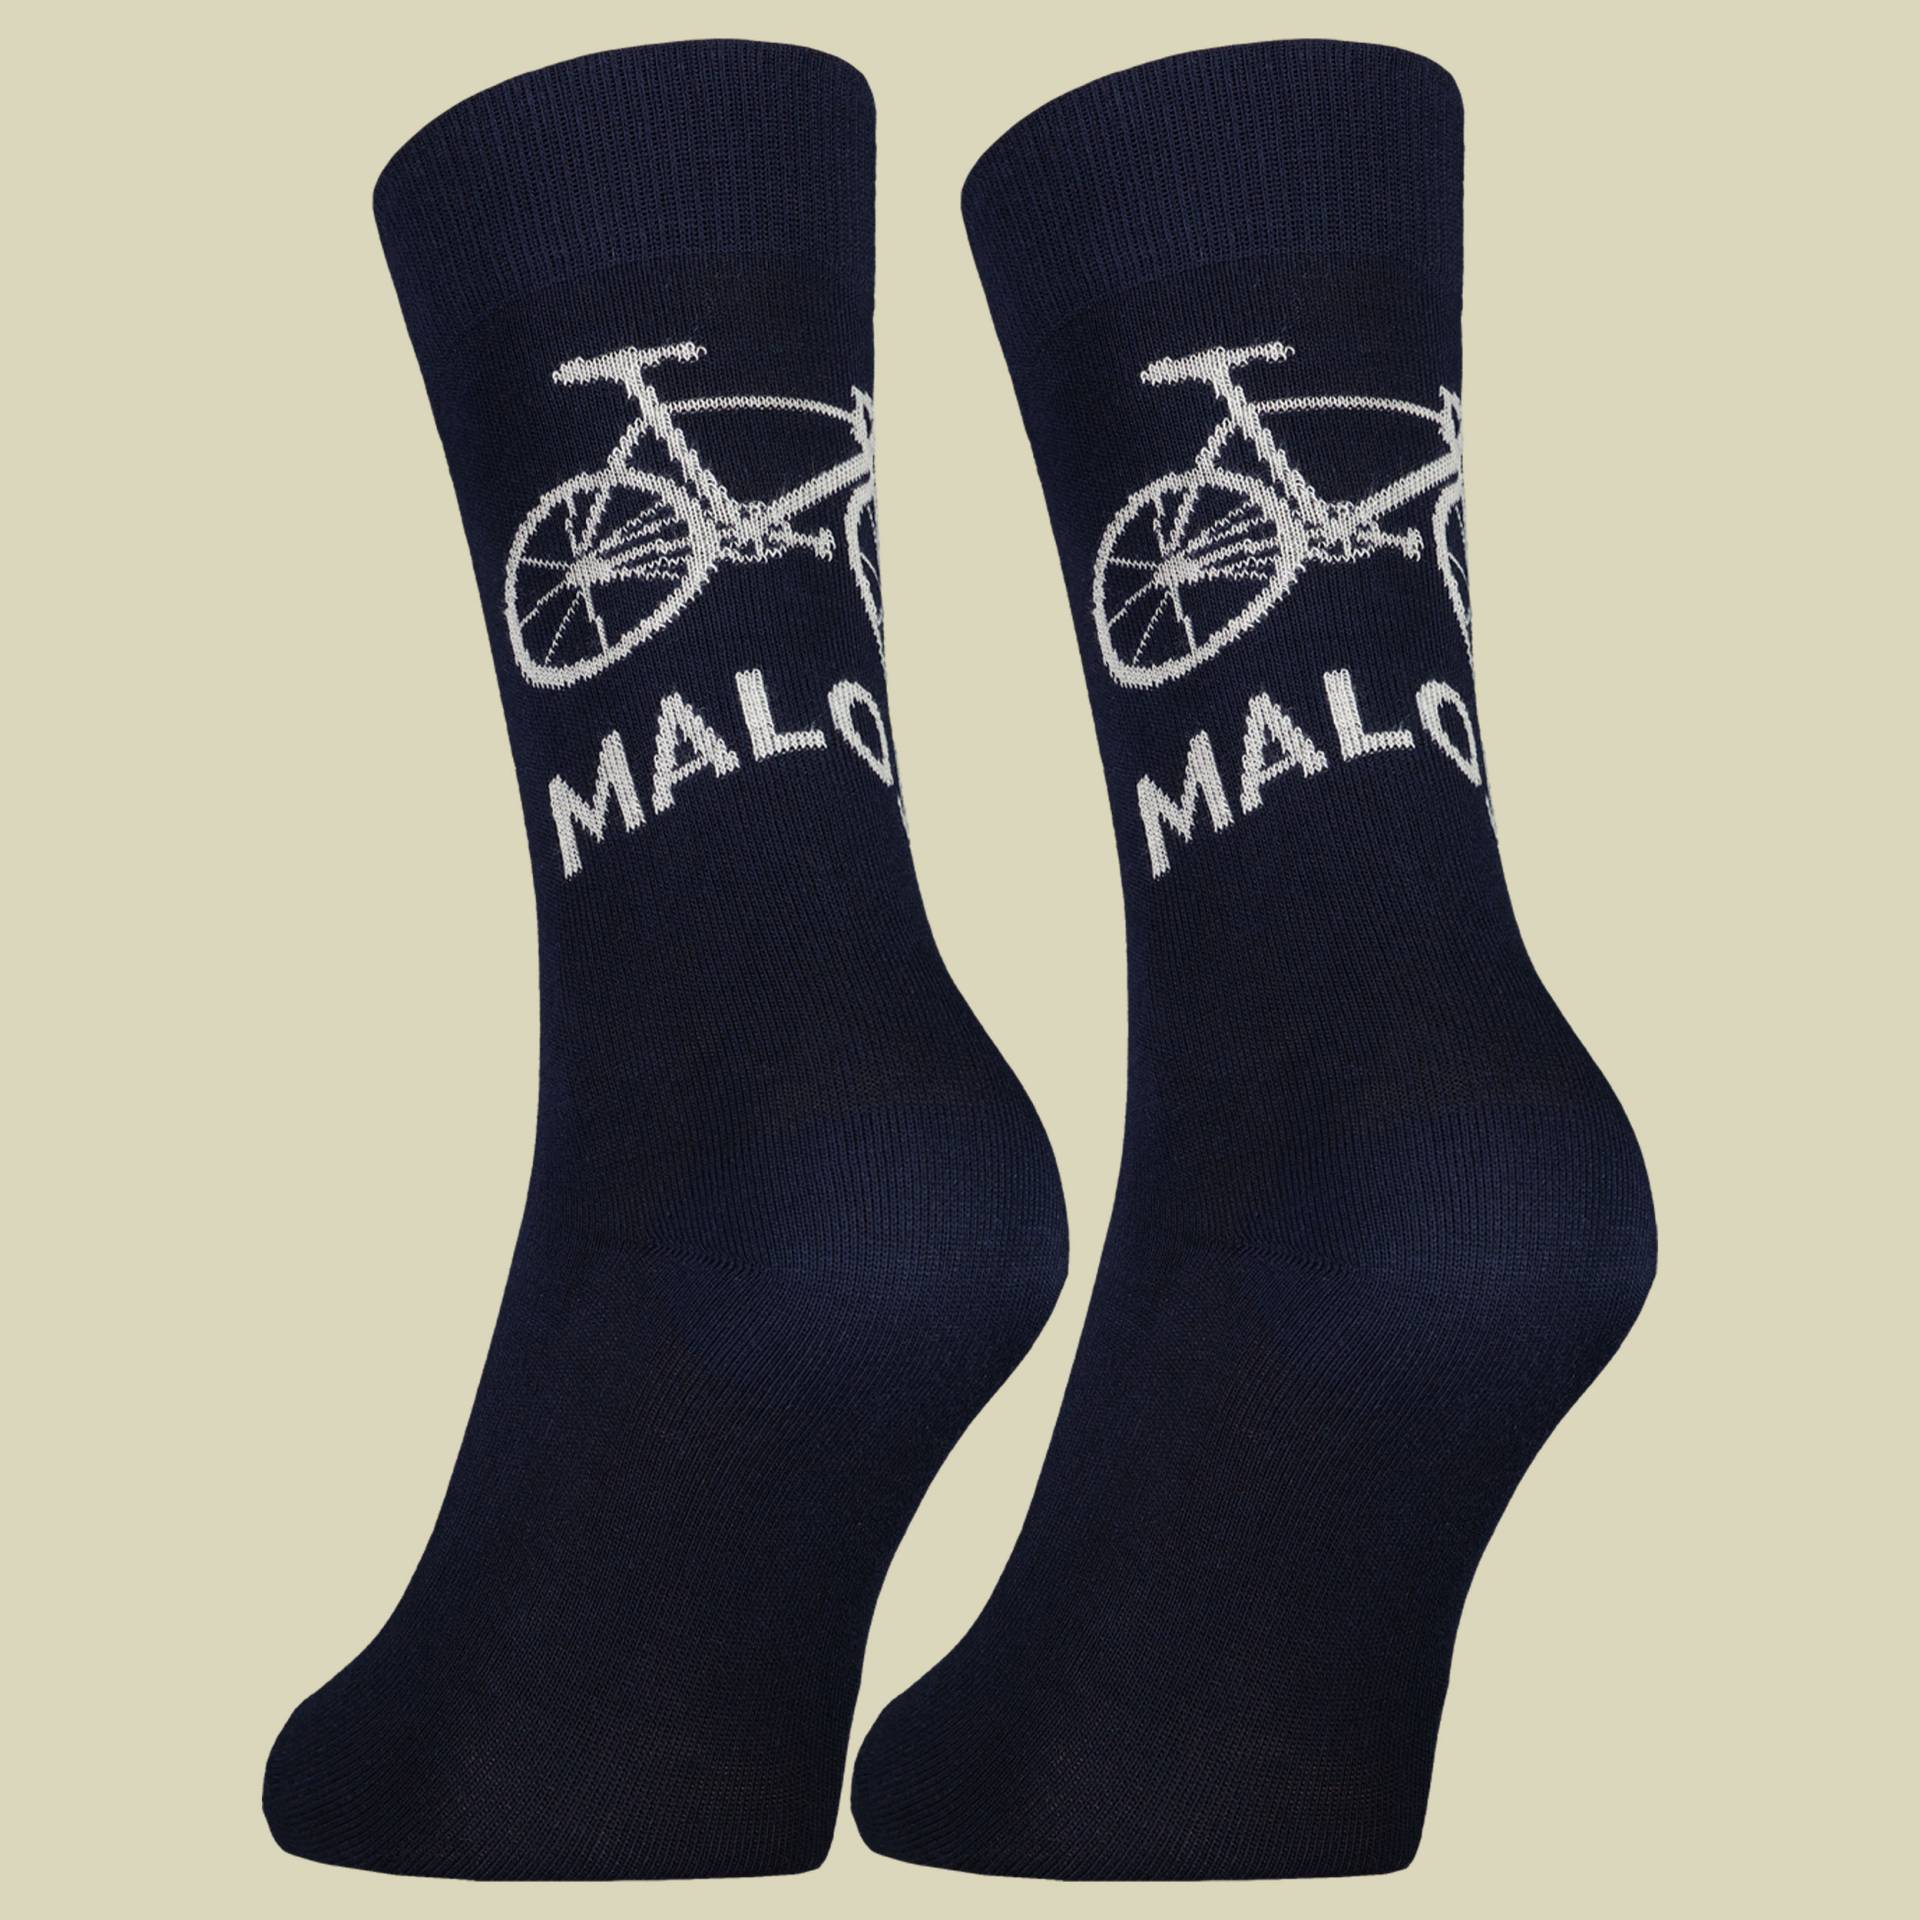 StalkM. Socks Men Größe 43-46 Farbe night sky von Maloja